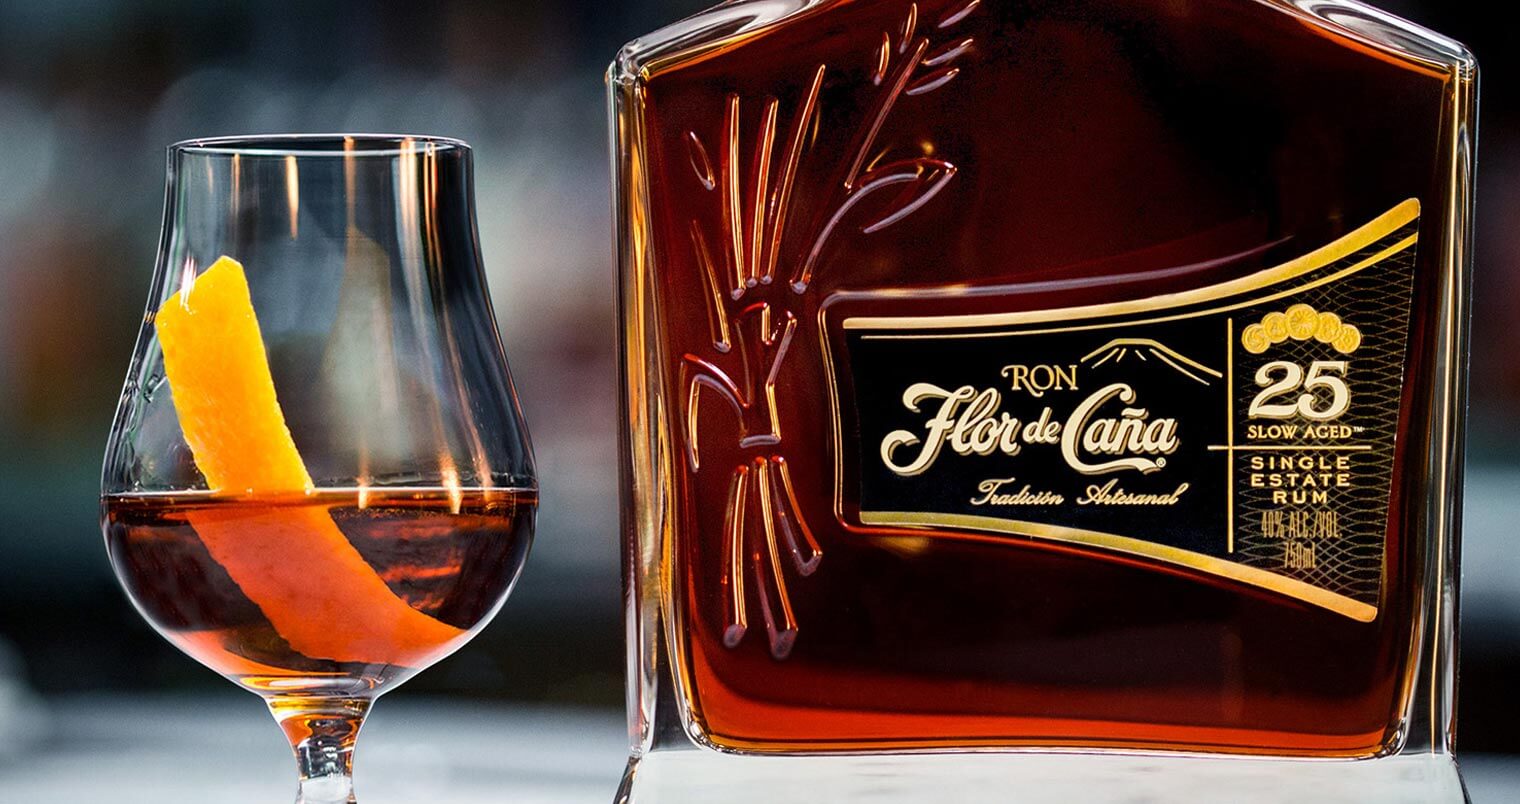 Flor de Caña Centenario 25 Named "2017 Best Rum of the Year", featured image